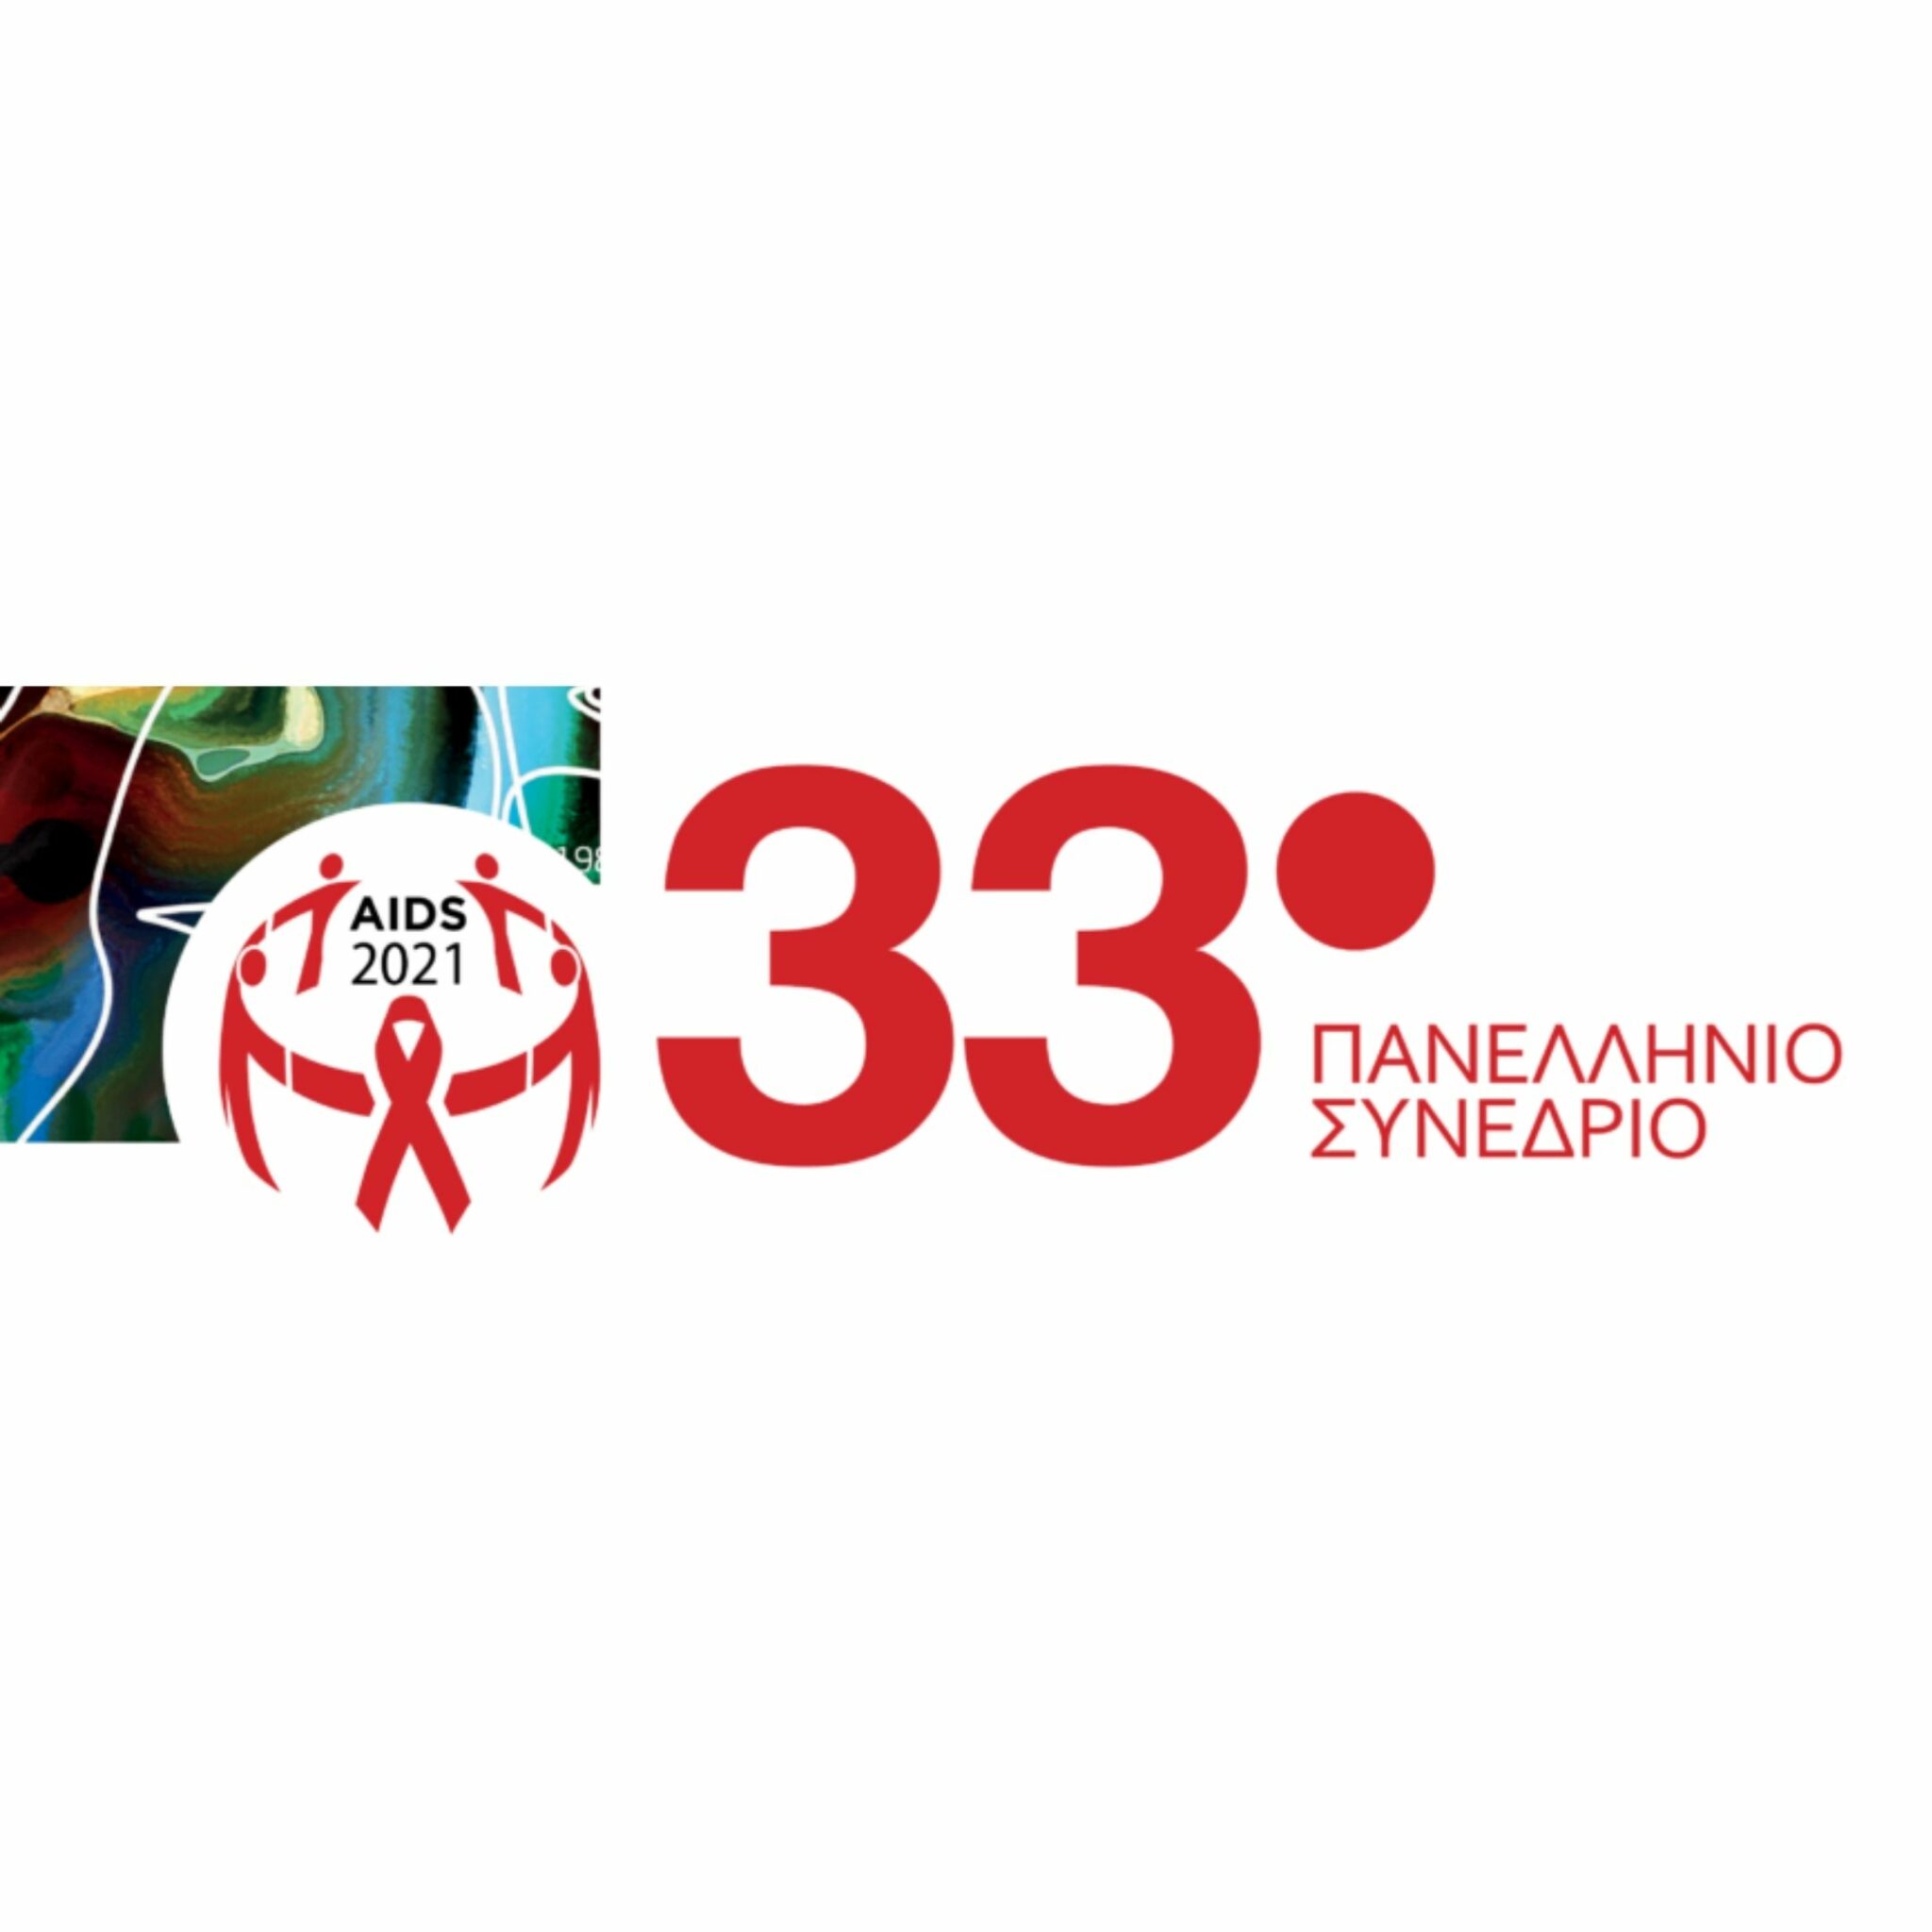 Featured image for “33ο Πανελλήνιο Συνέδριο AIDS 25-27/11/2021”